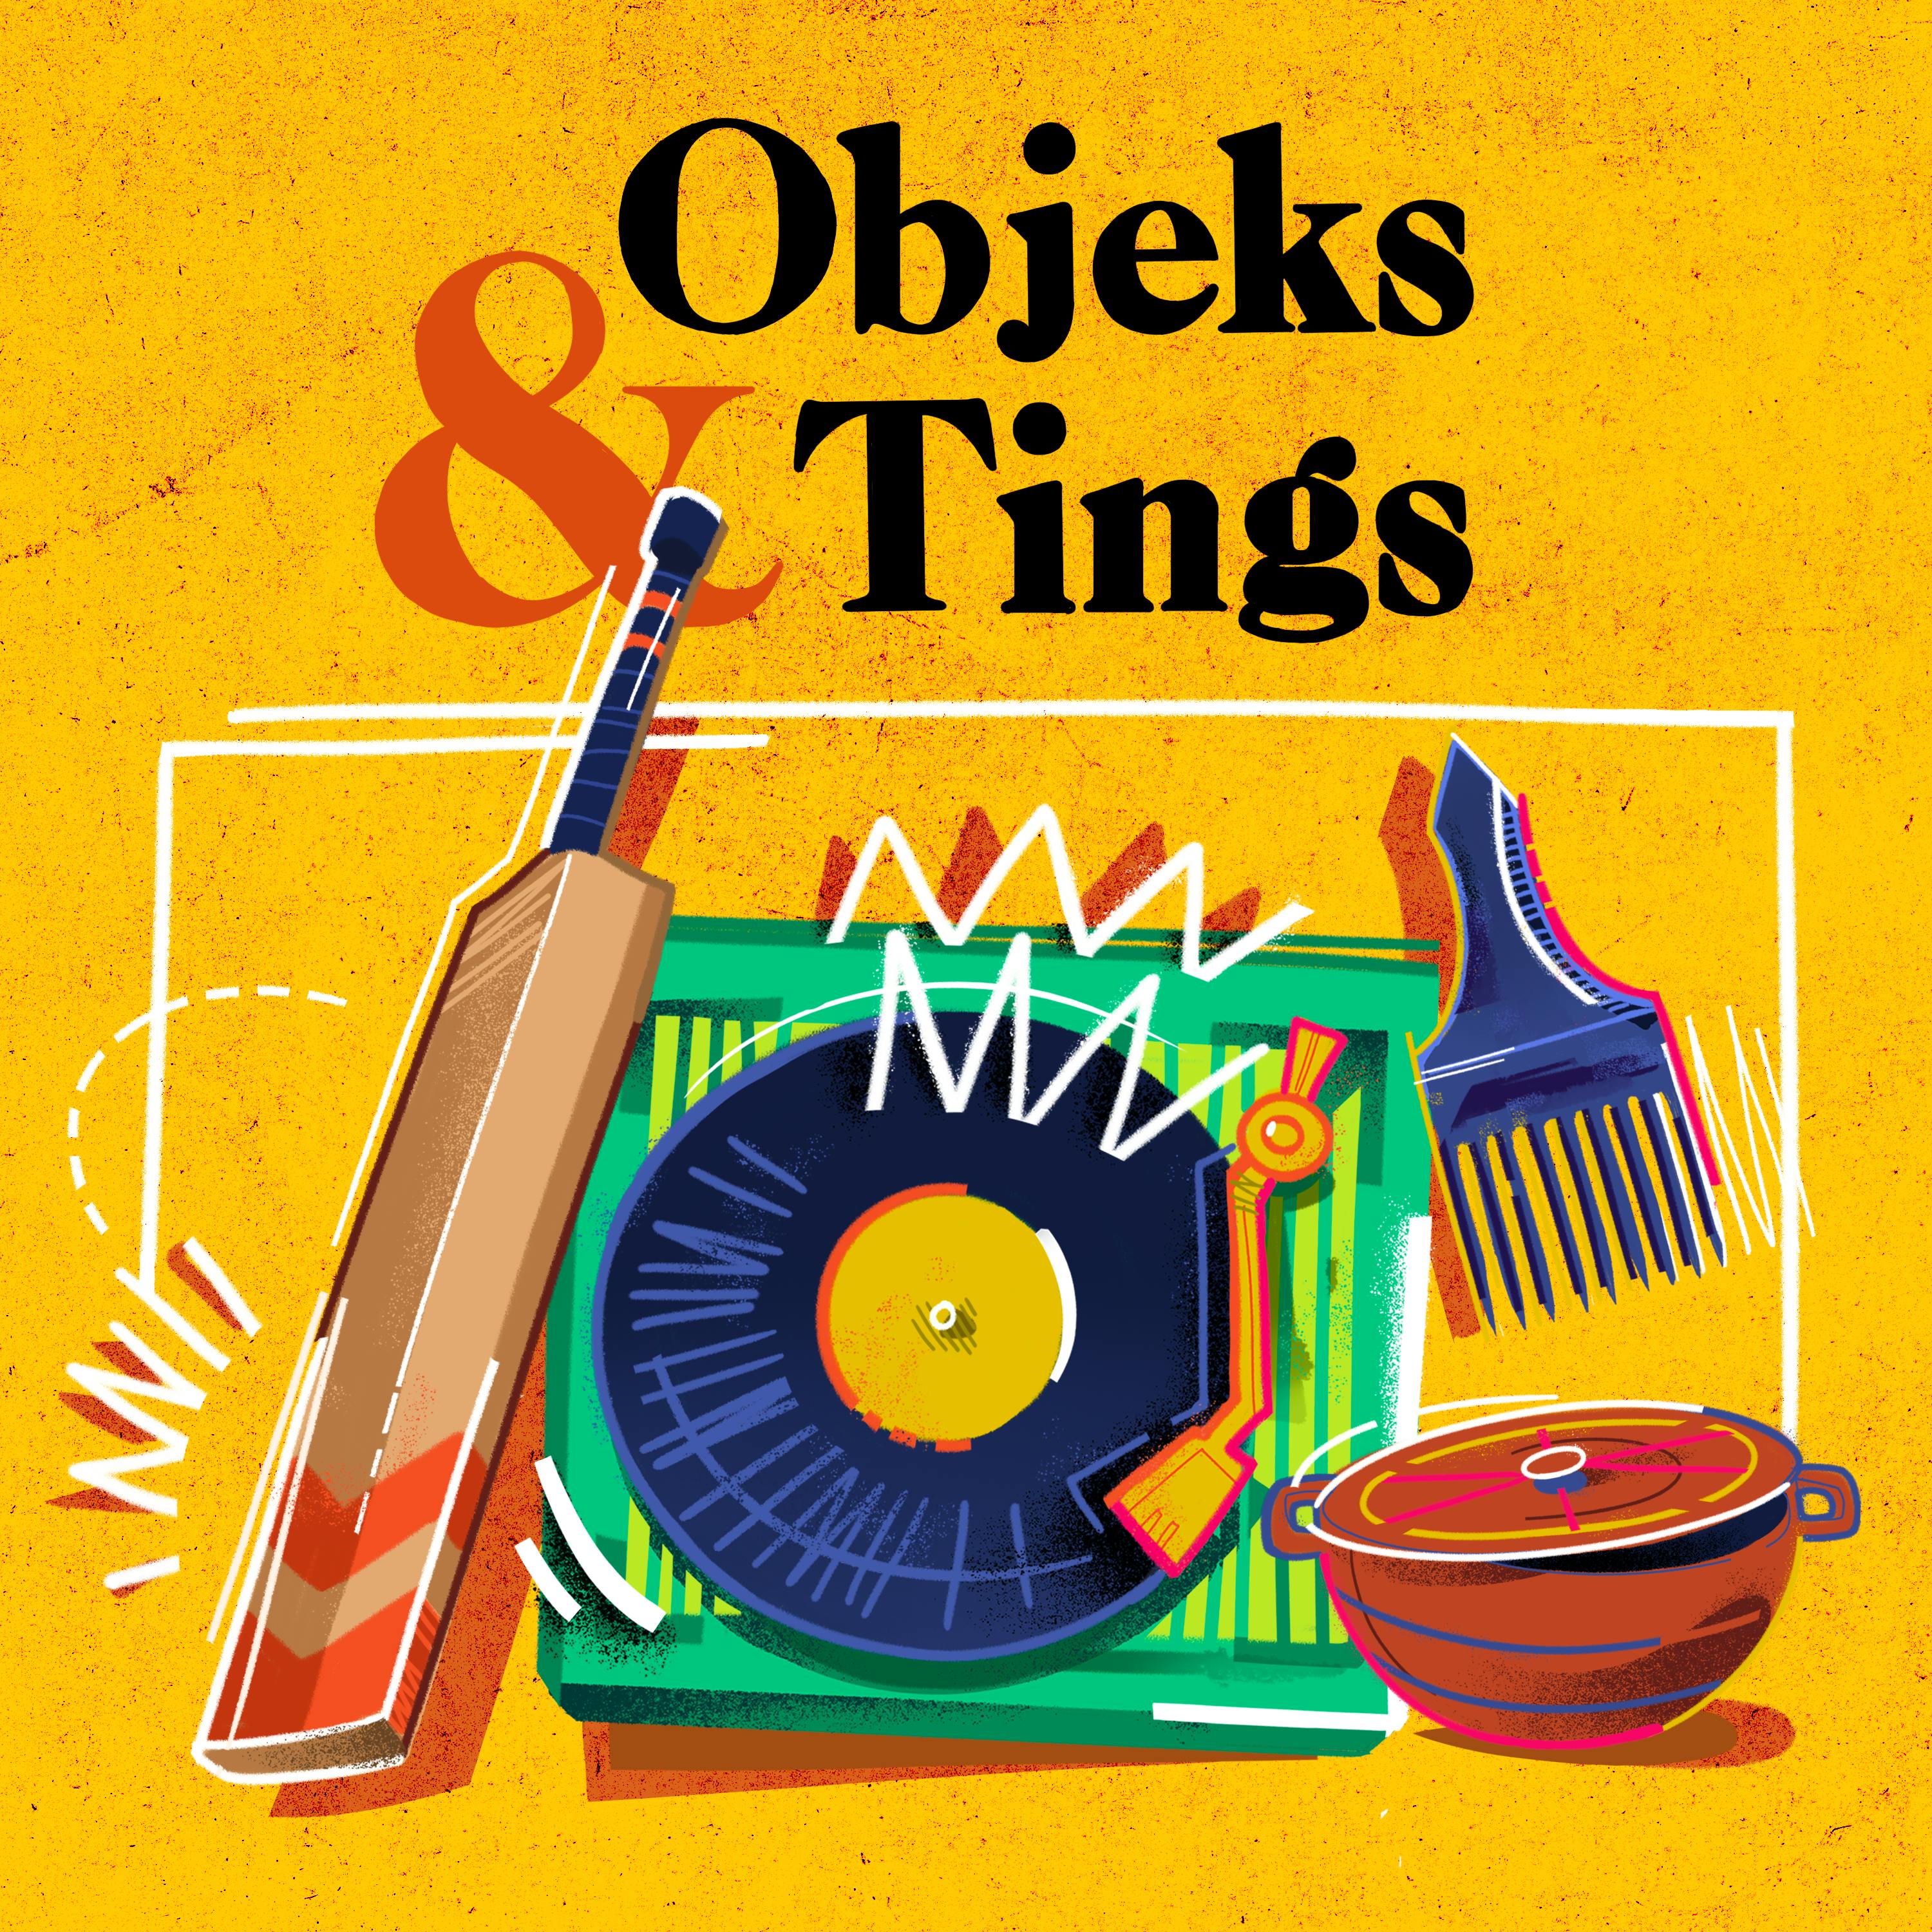 Objeks & Tings podcast show image